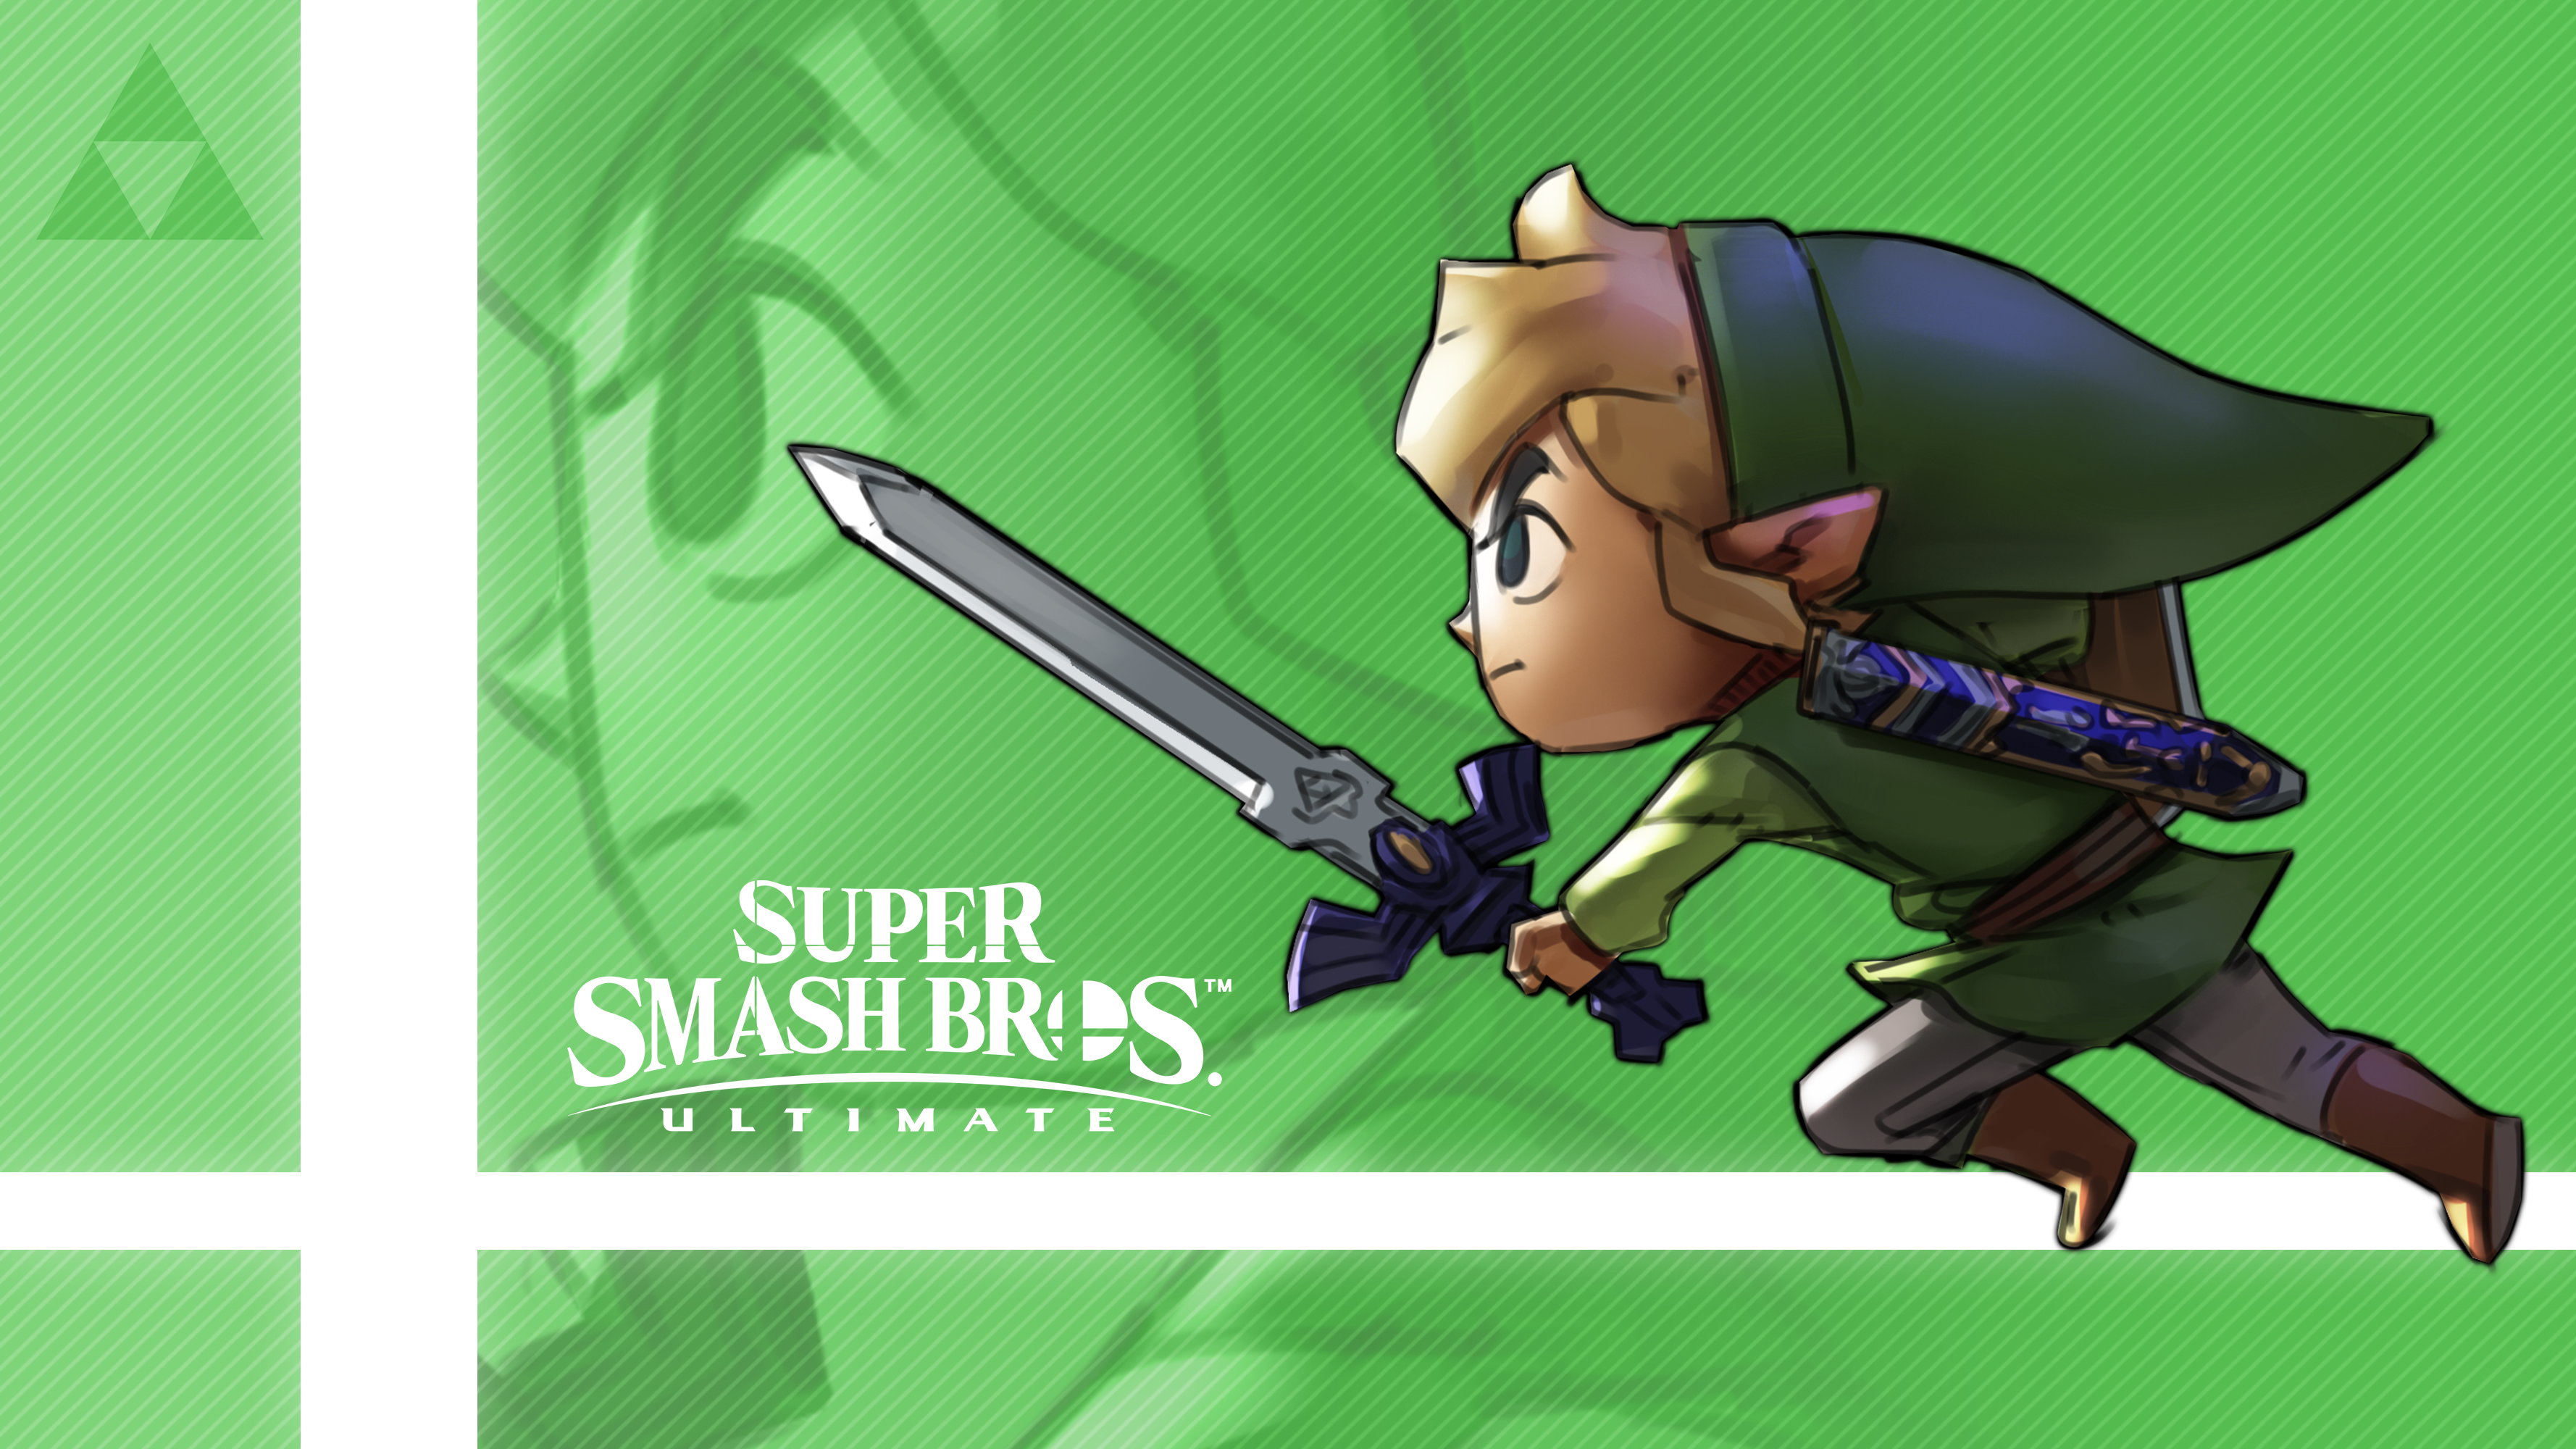 Toon Link In Super Smash Bros. Ultimate by Callum Nakajima